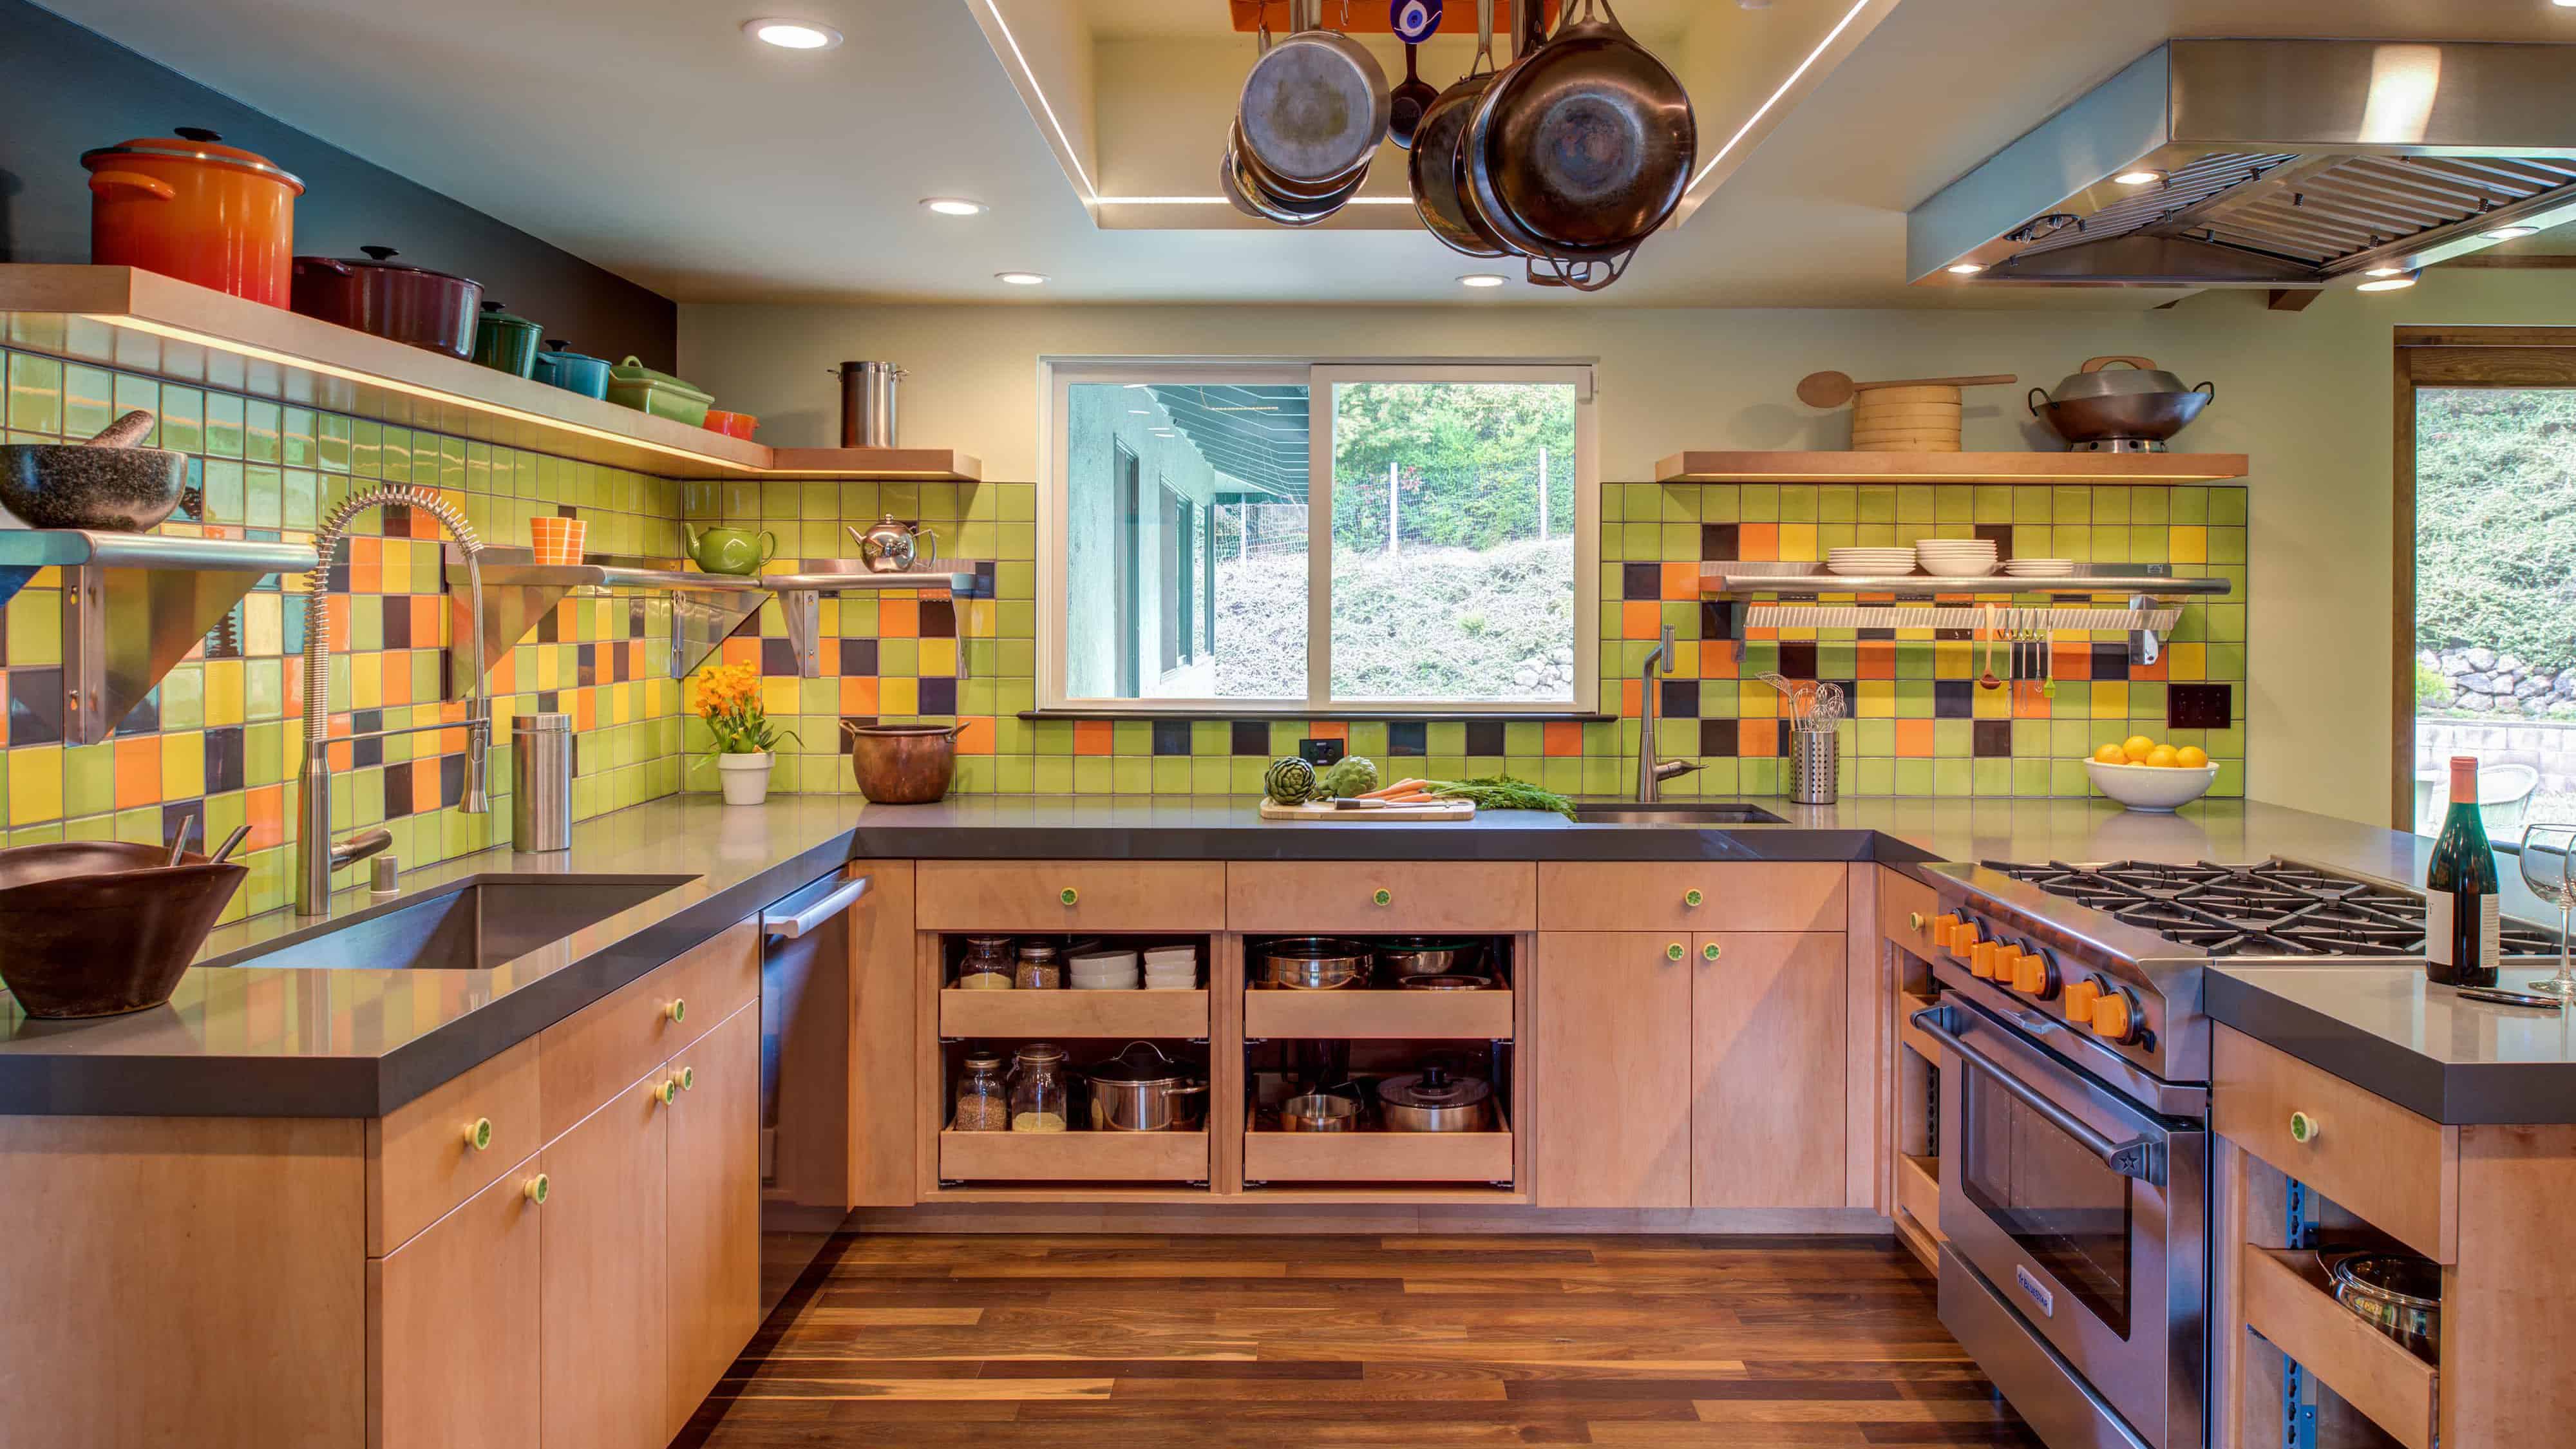 Retro kitchen remodel with colorful backsplash tiles.